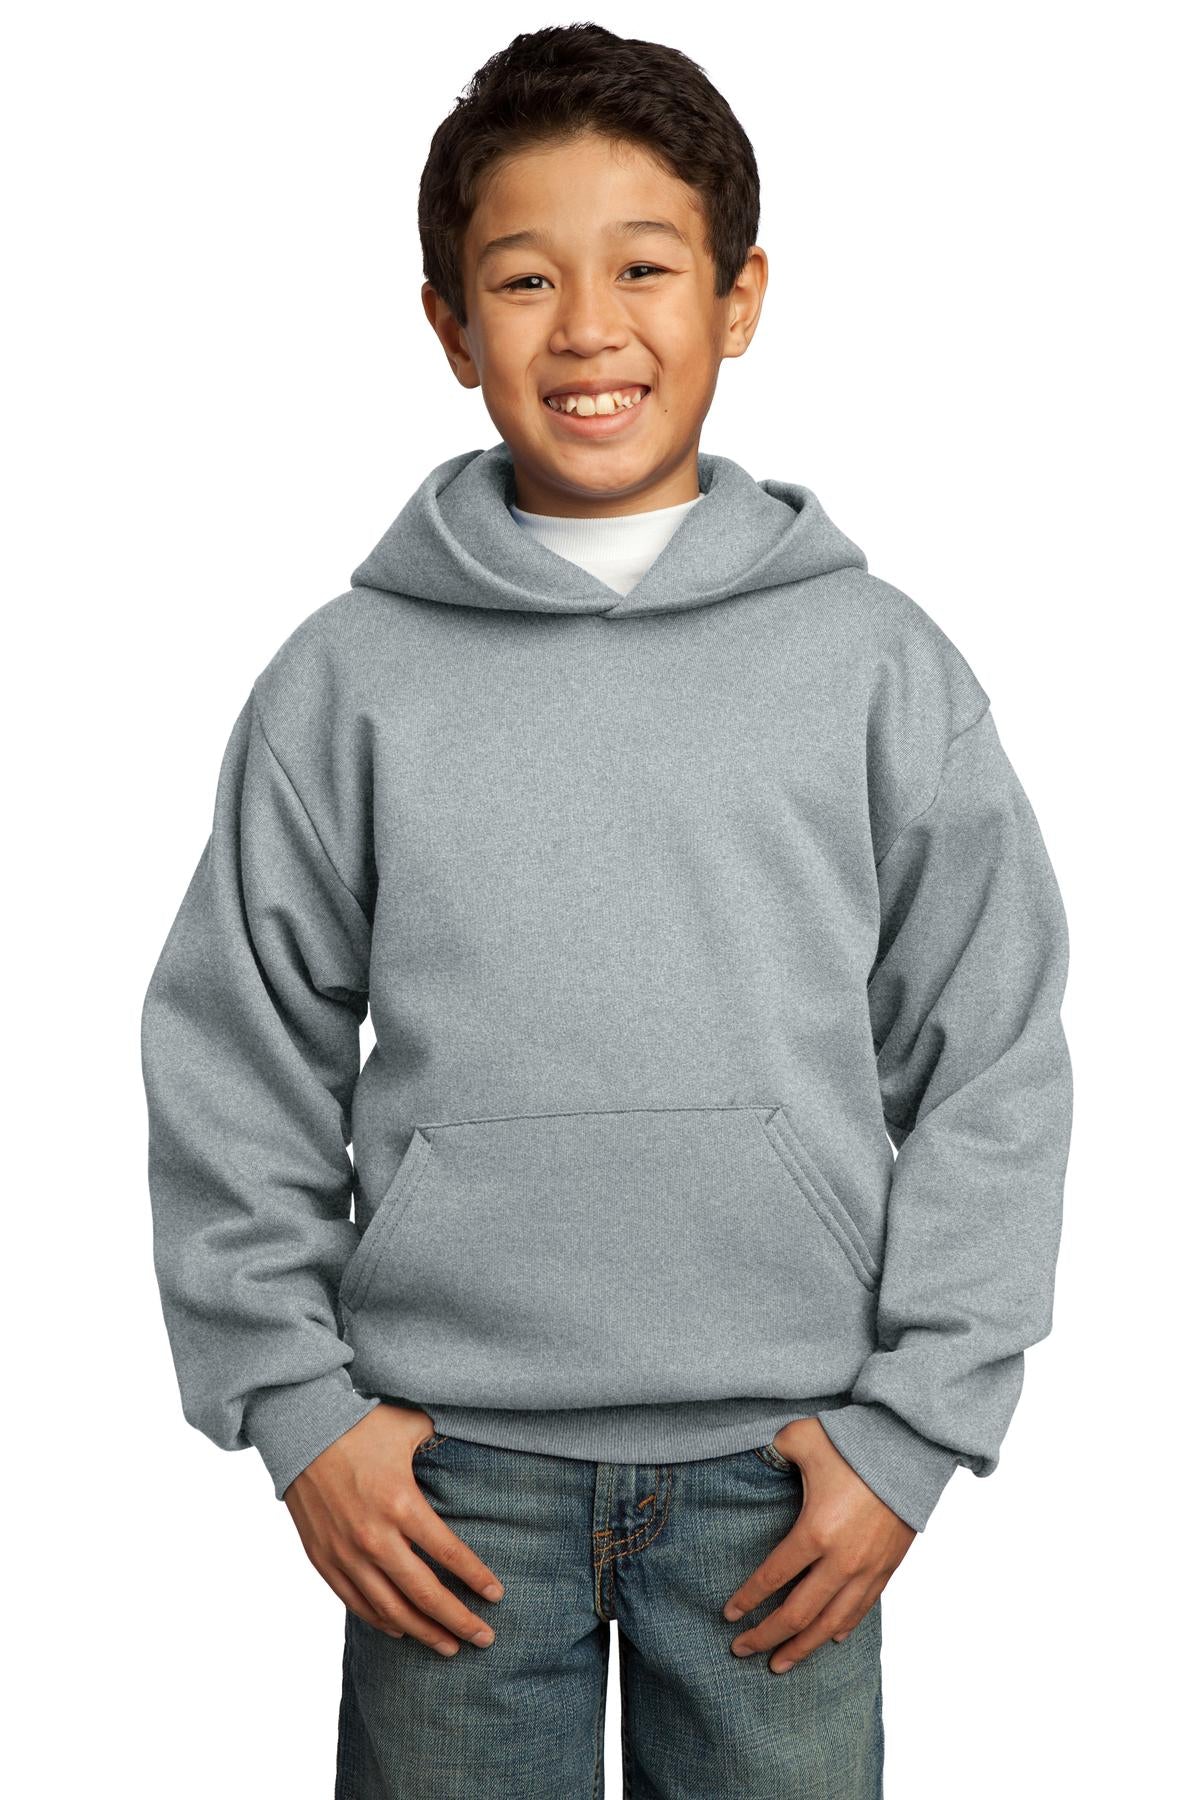 Next LevelPort & Company® - Youth Core Fleece Pullover Hooded Sweatshirt.  PC90YH